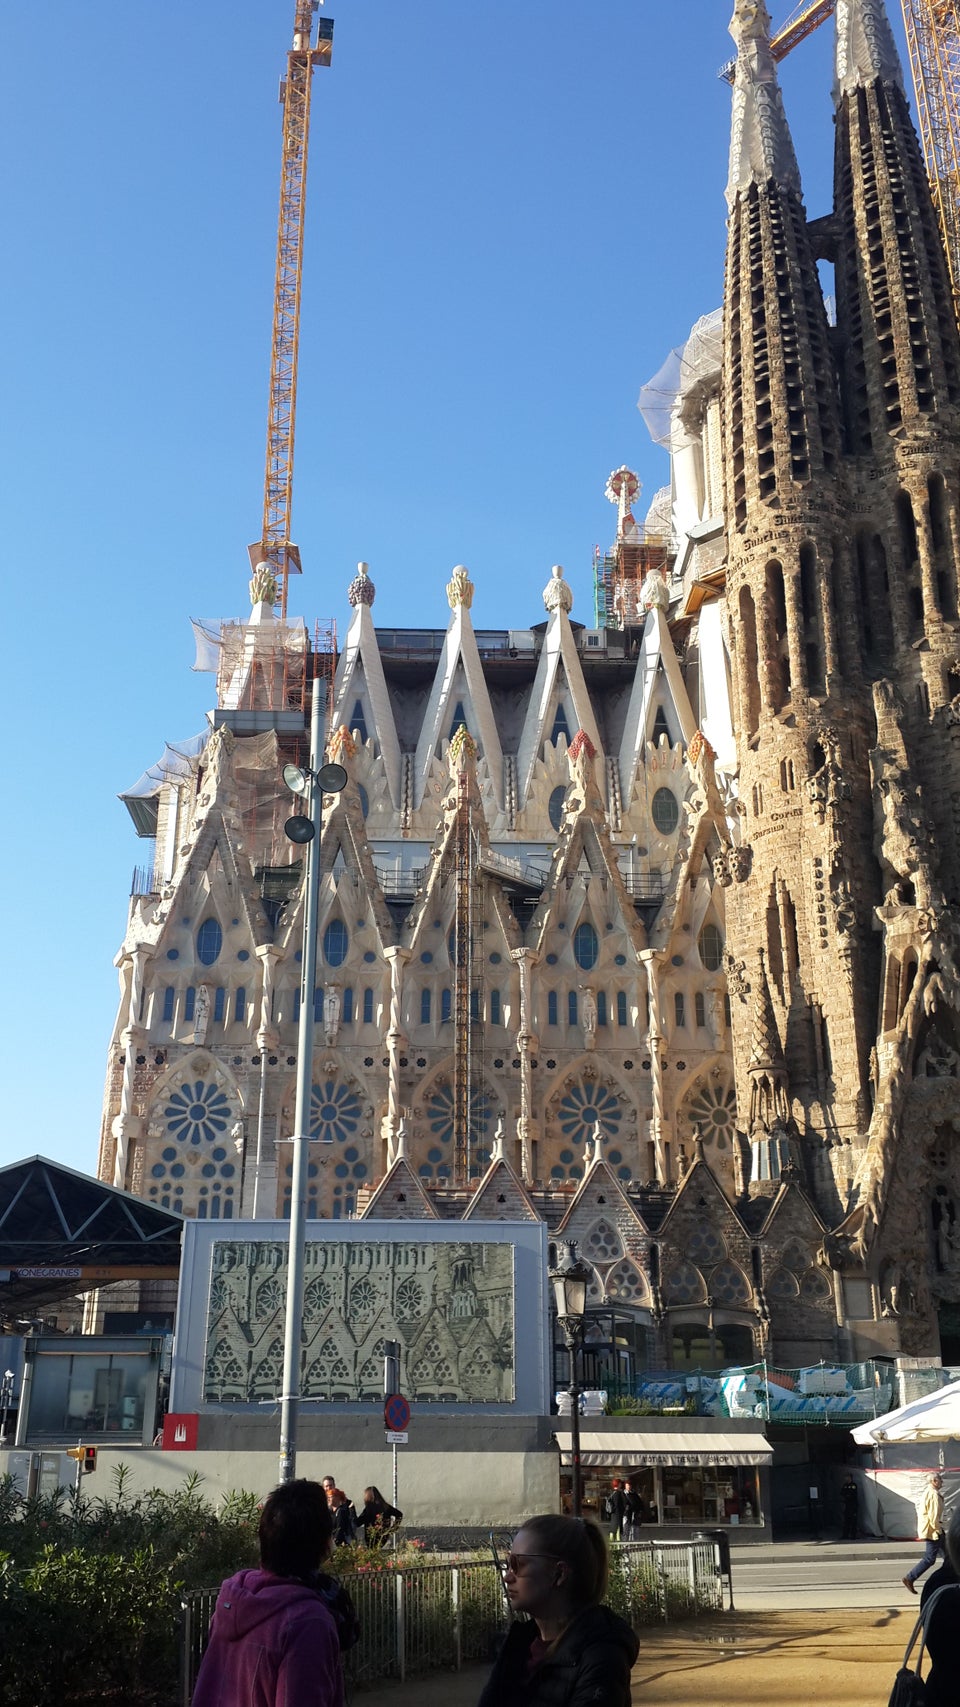 Photo of La Sagrada Familia